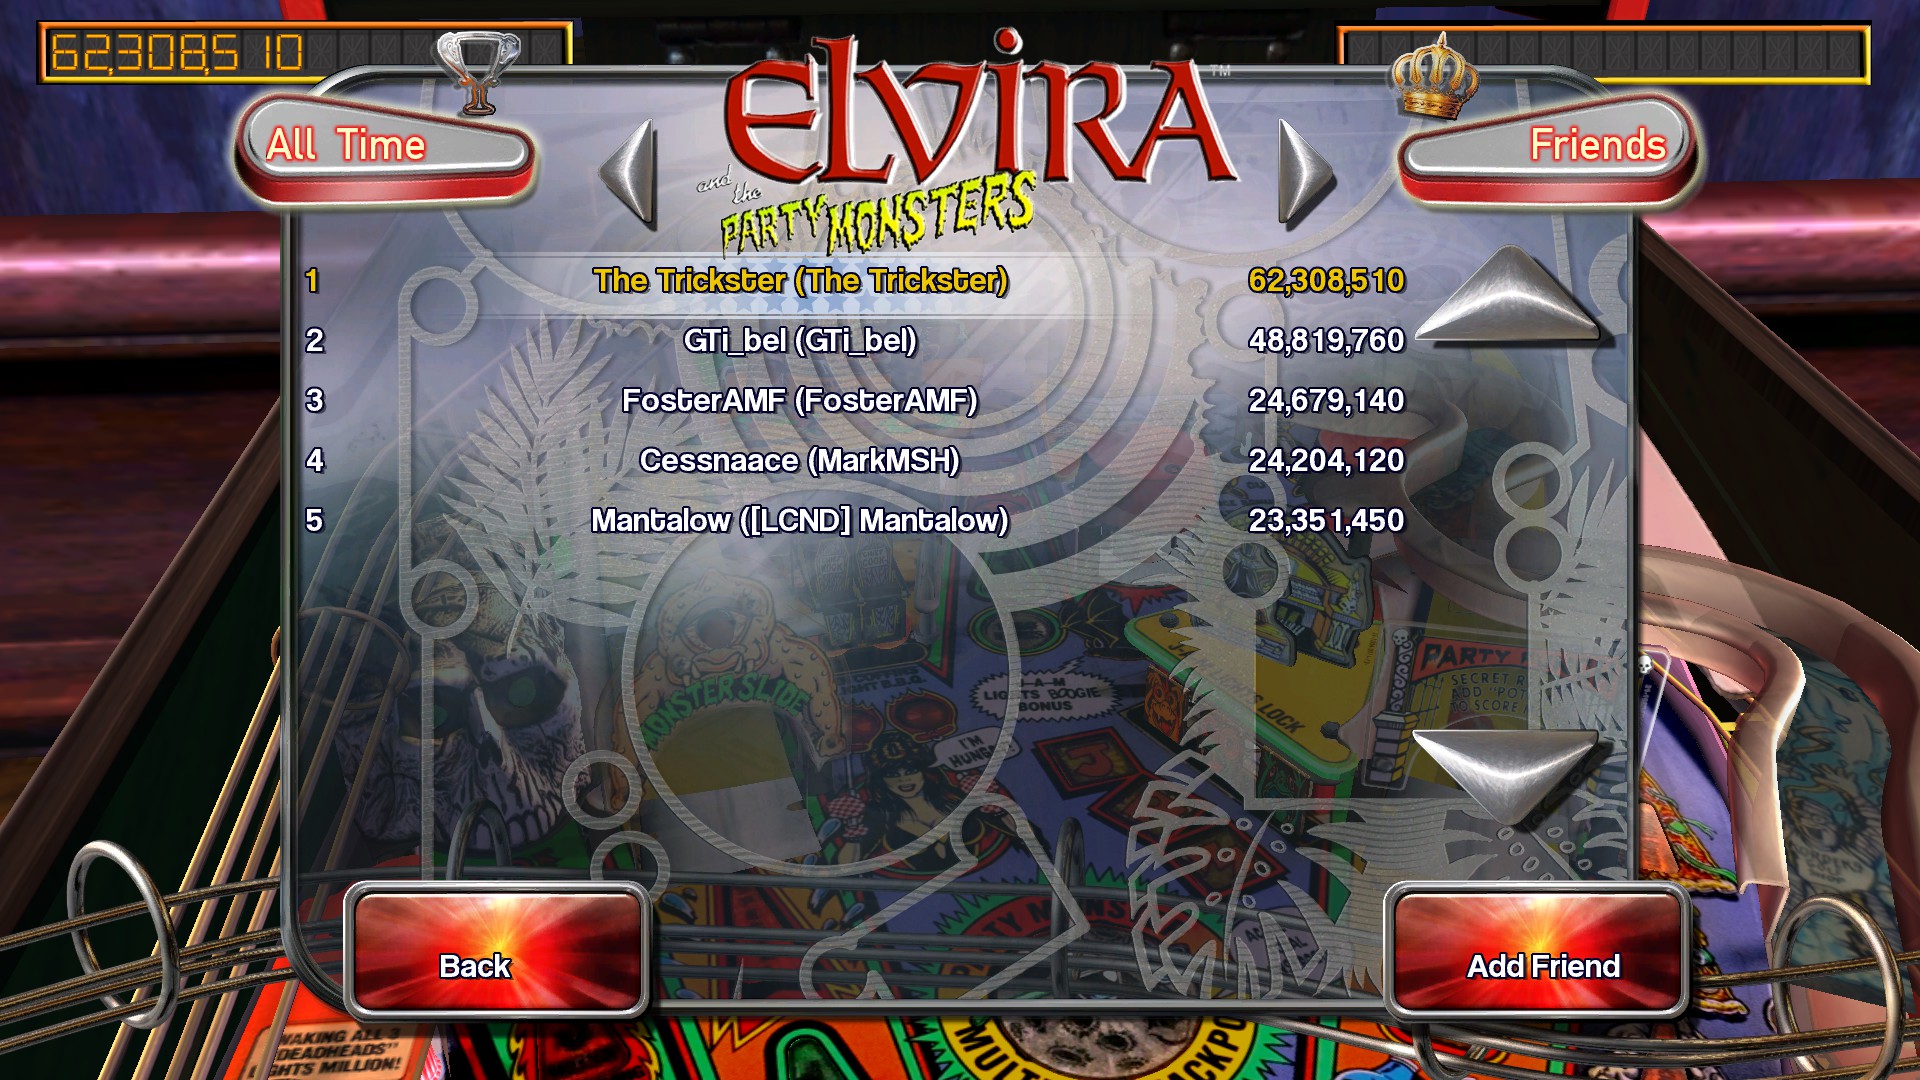 TheTrickster: Pinball Arcade: Elvira (PC) 62,308,510 points on 2015-12-04 05:18:25